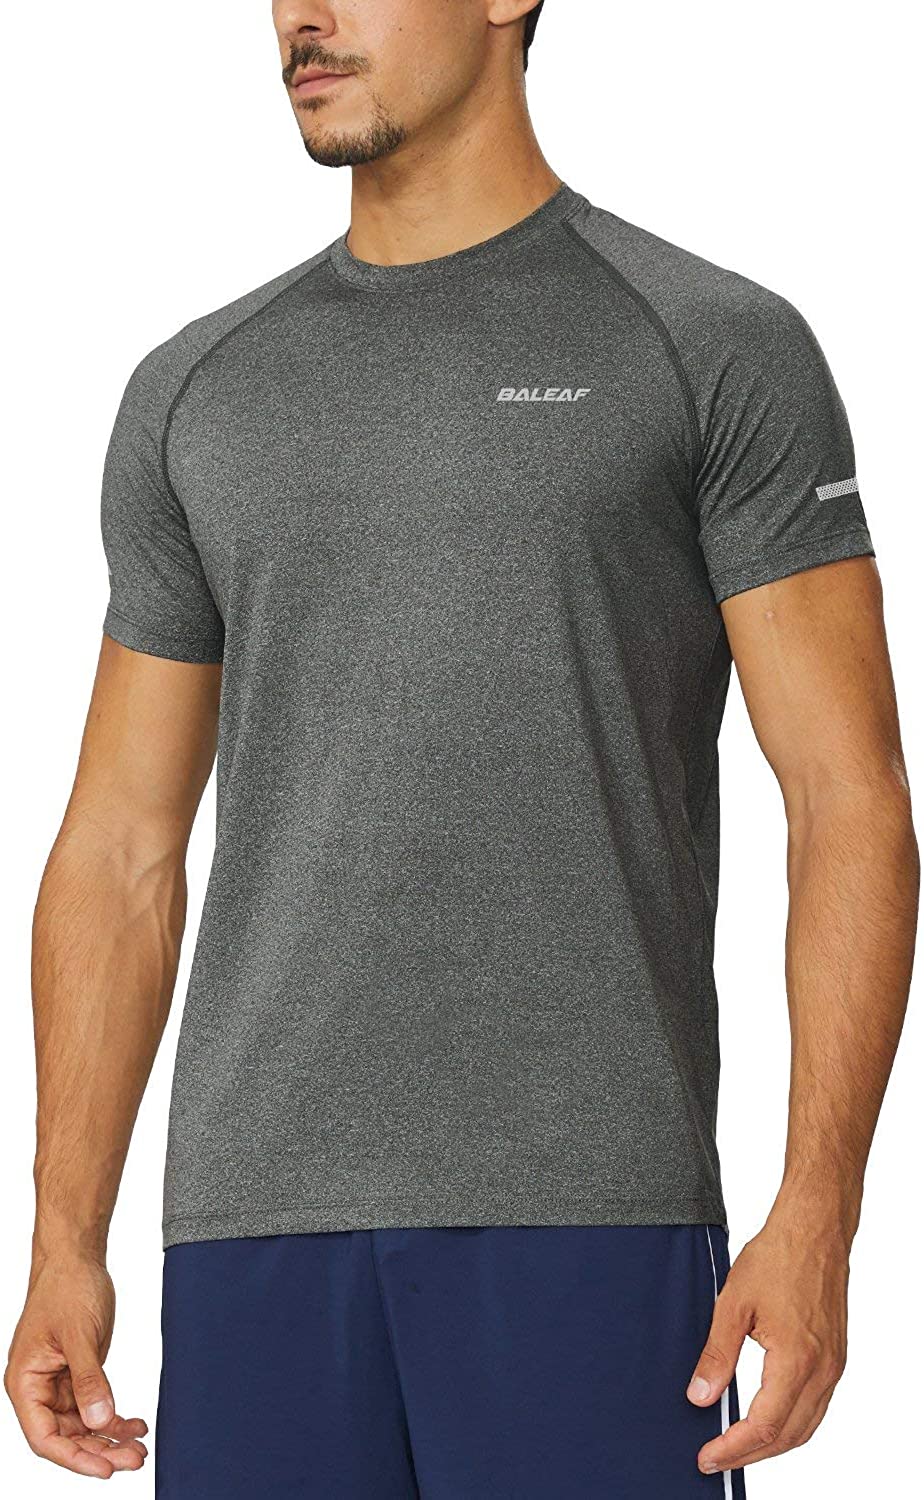 Baleaf Short Sleeve Athletic T-Shirts for Women